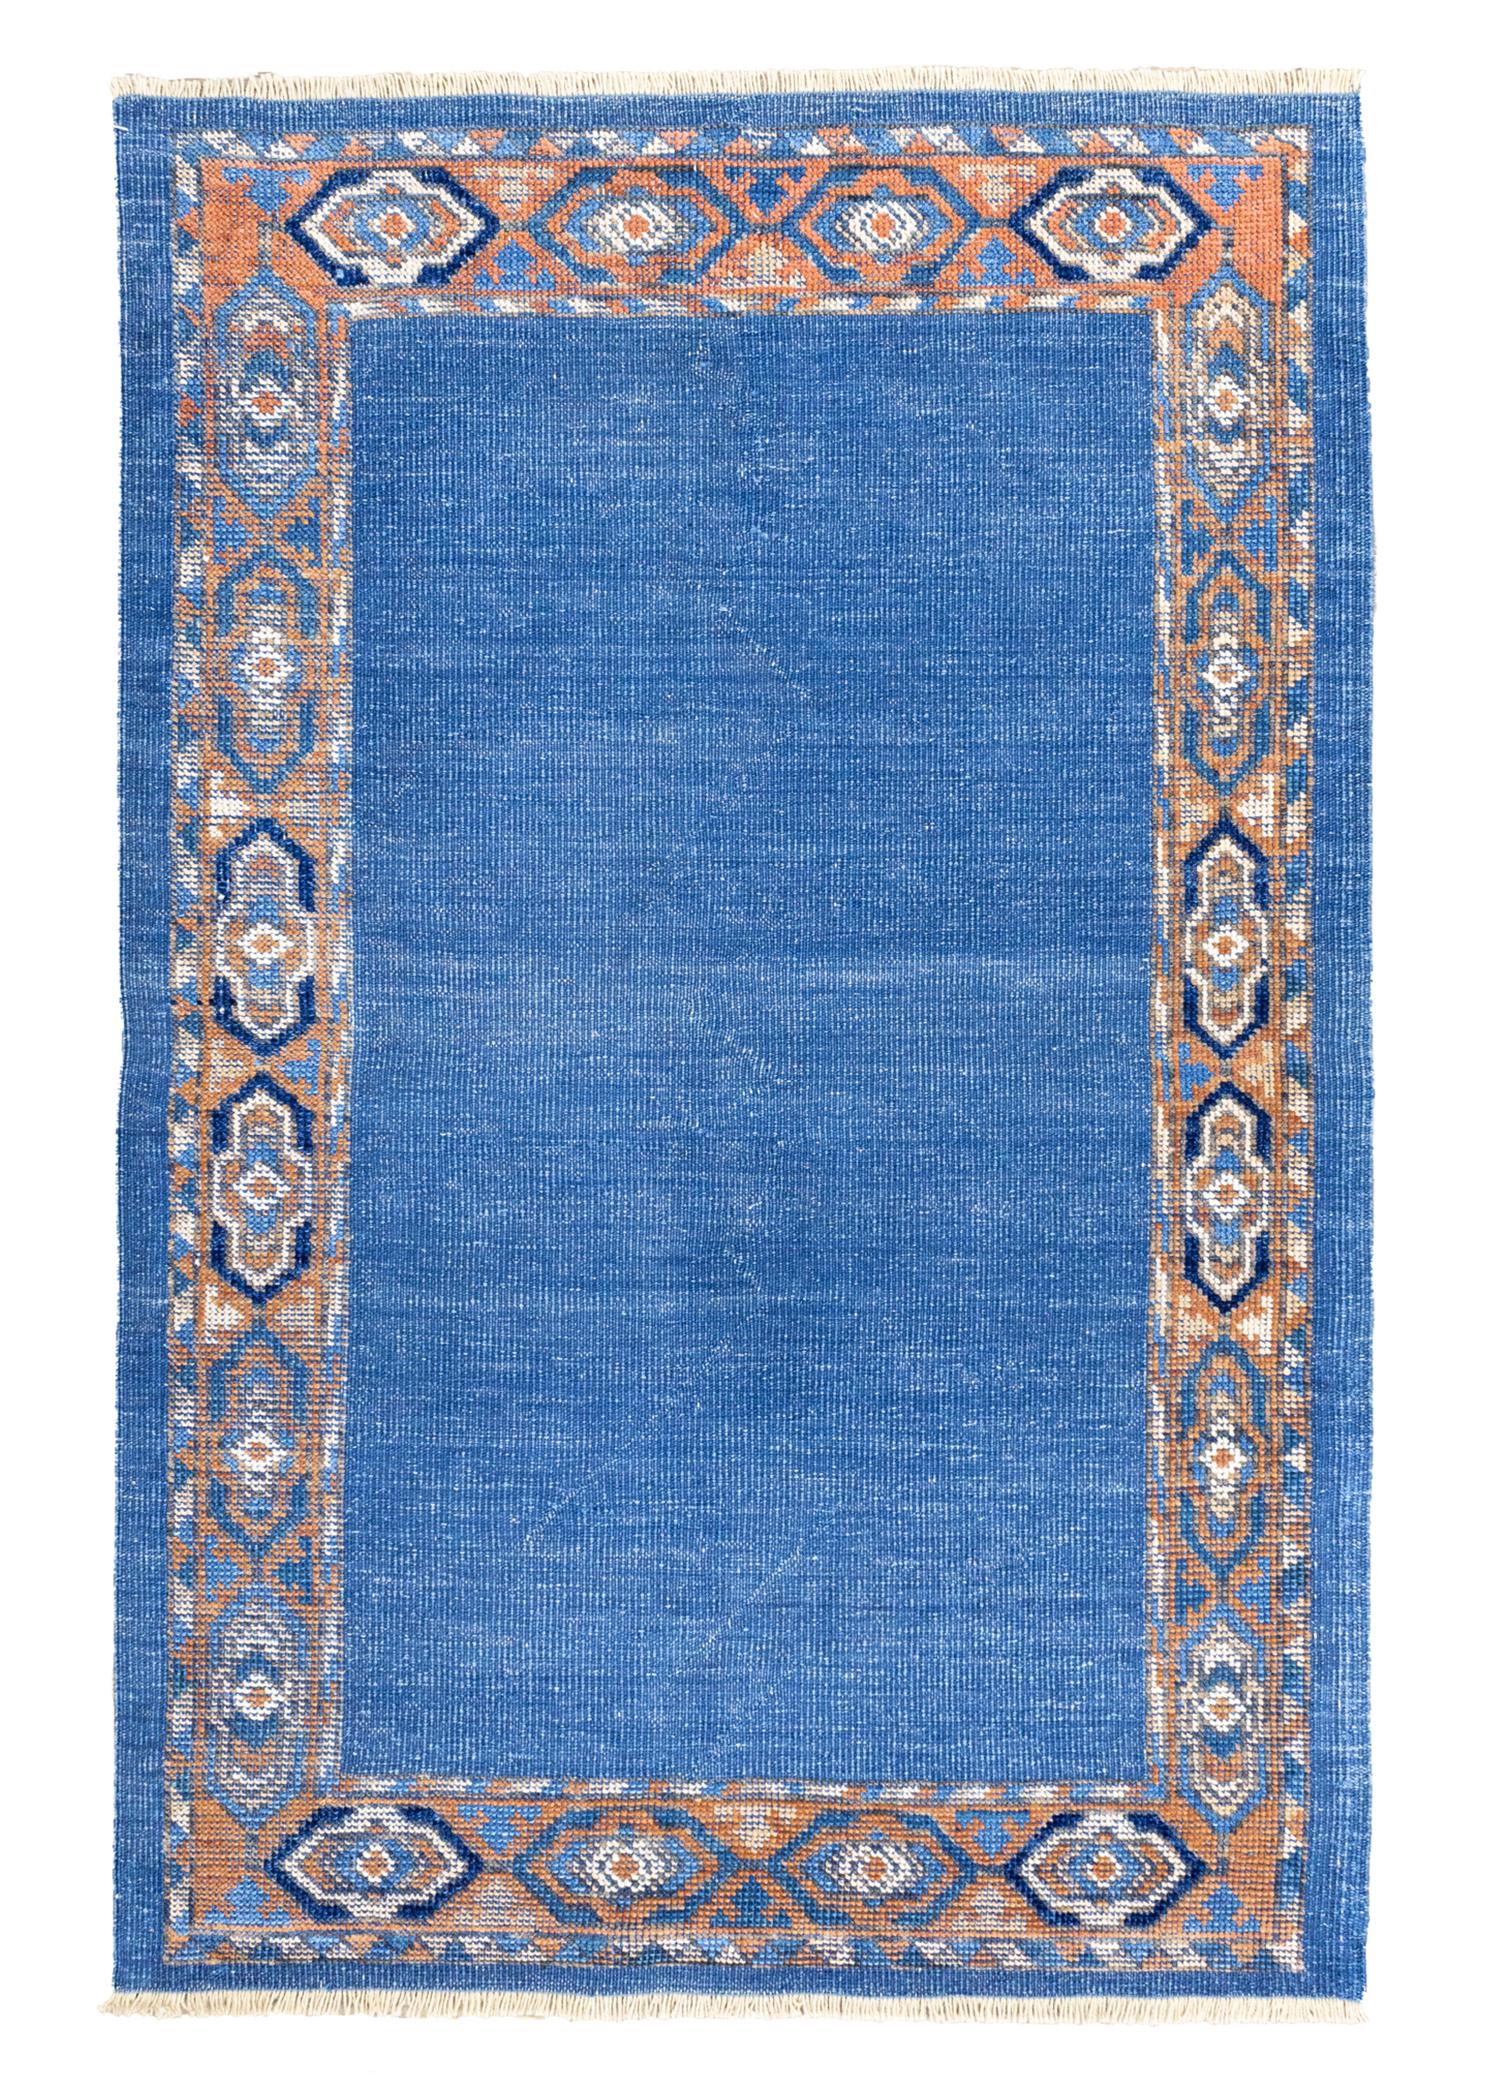 Salin Ethnic Bordered Hand Woven Carpet Rug 85x133 cm